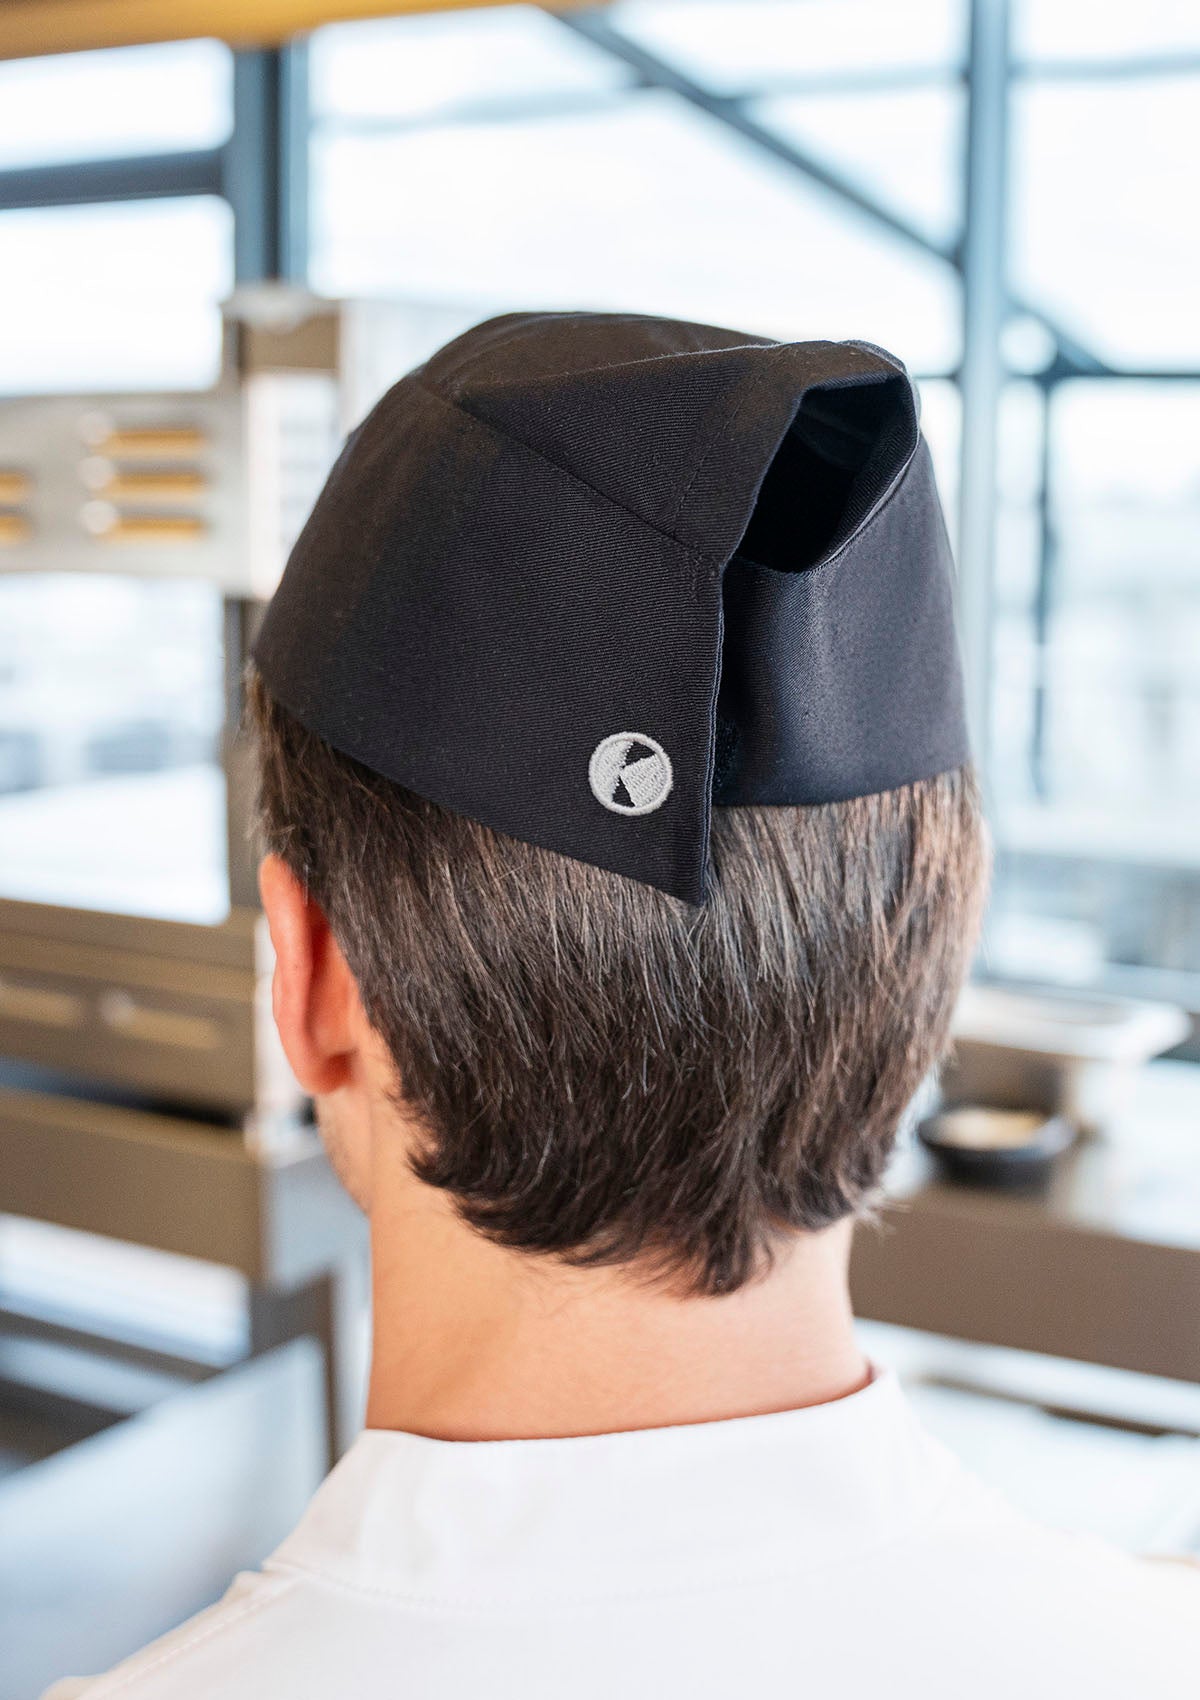 Chef Hat Size-Adjustable